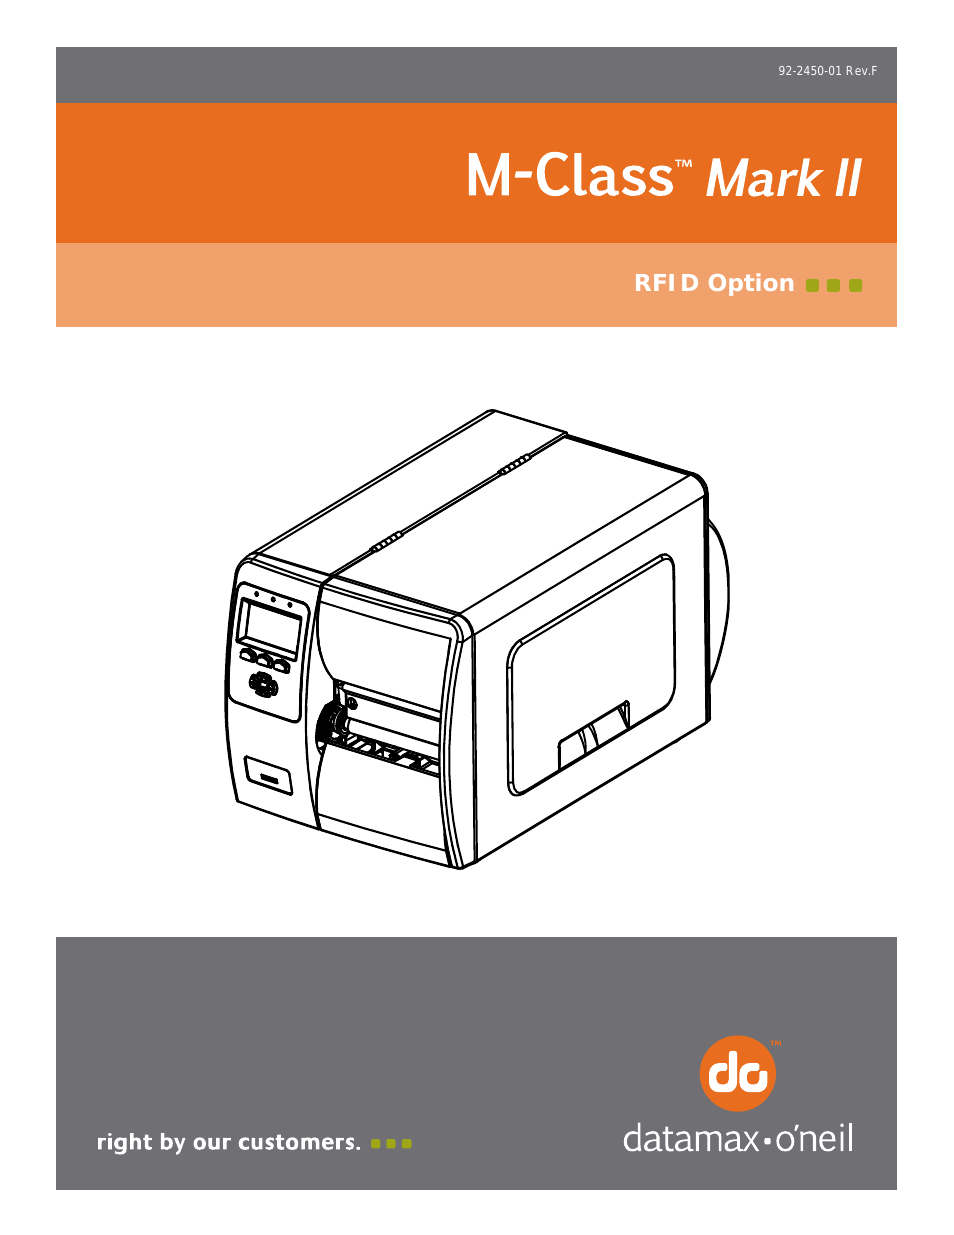 M-Class Mark II RFID Option